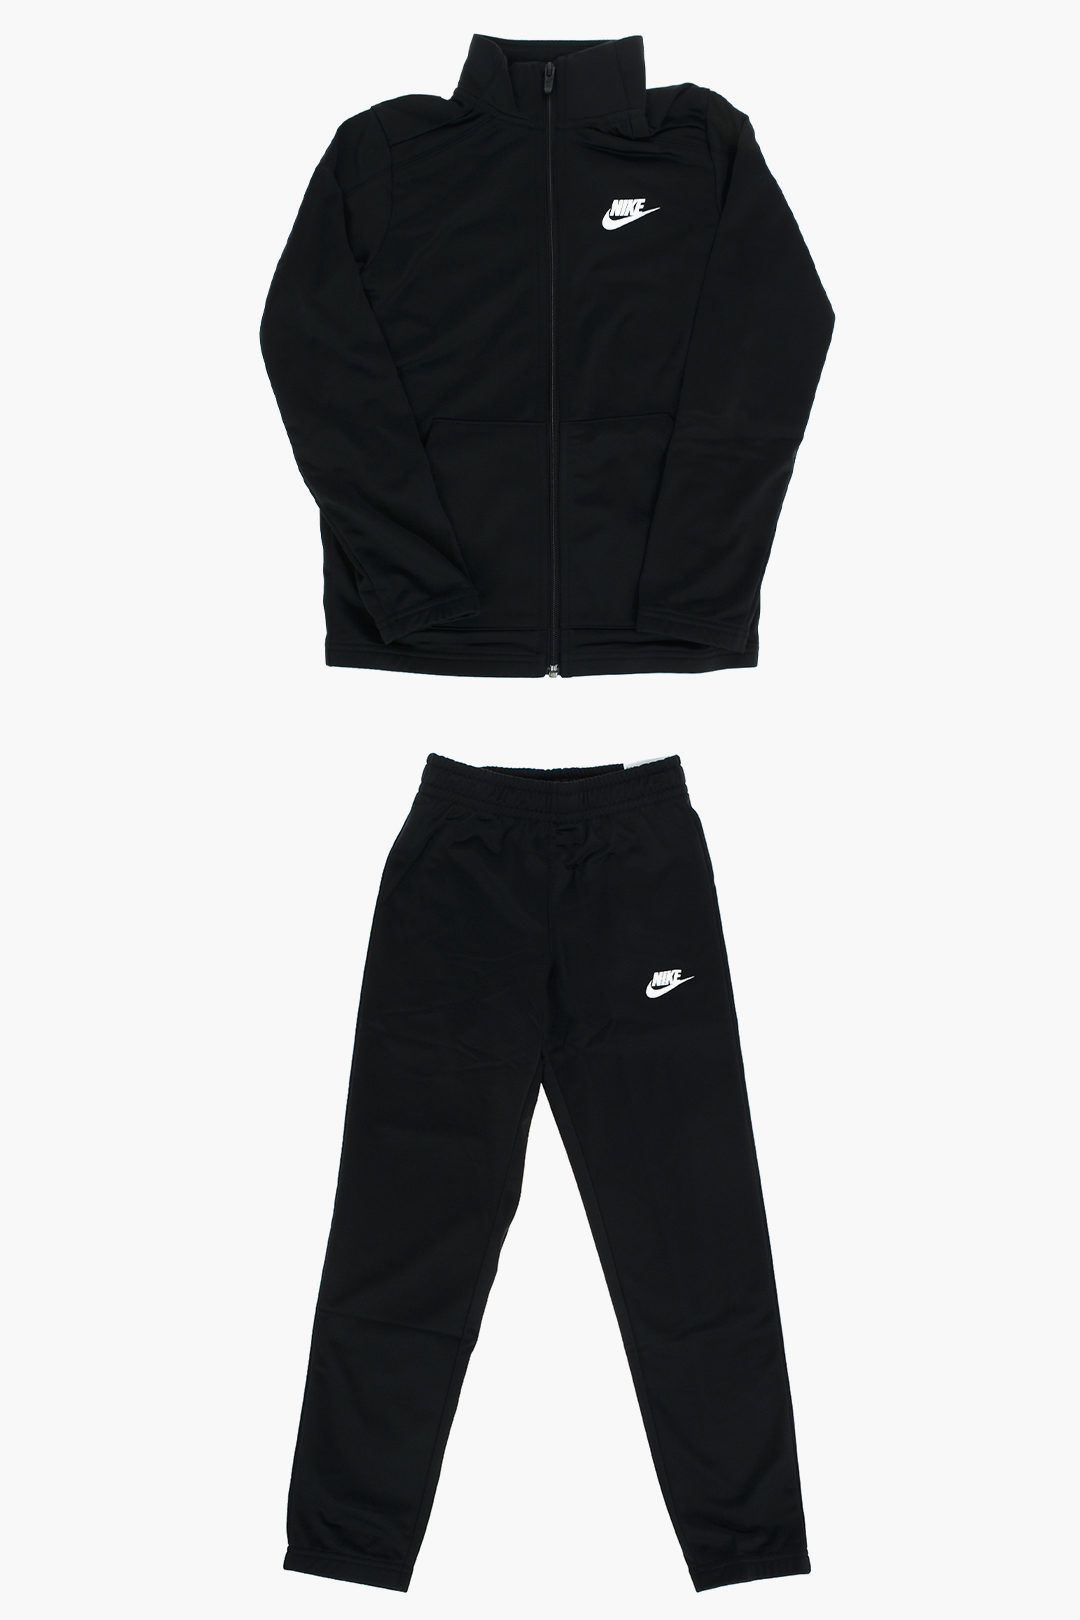 Nike KIDS Full Zip Sweatshirt and Joggers Set unisex children boys girls -  Glamood Outlet